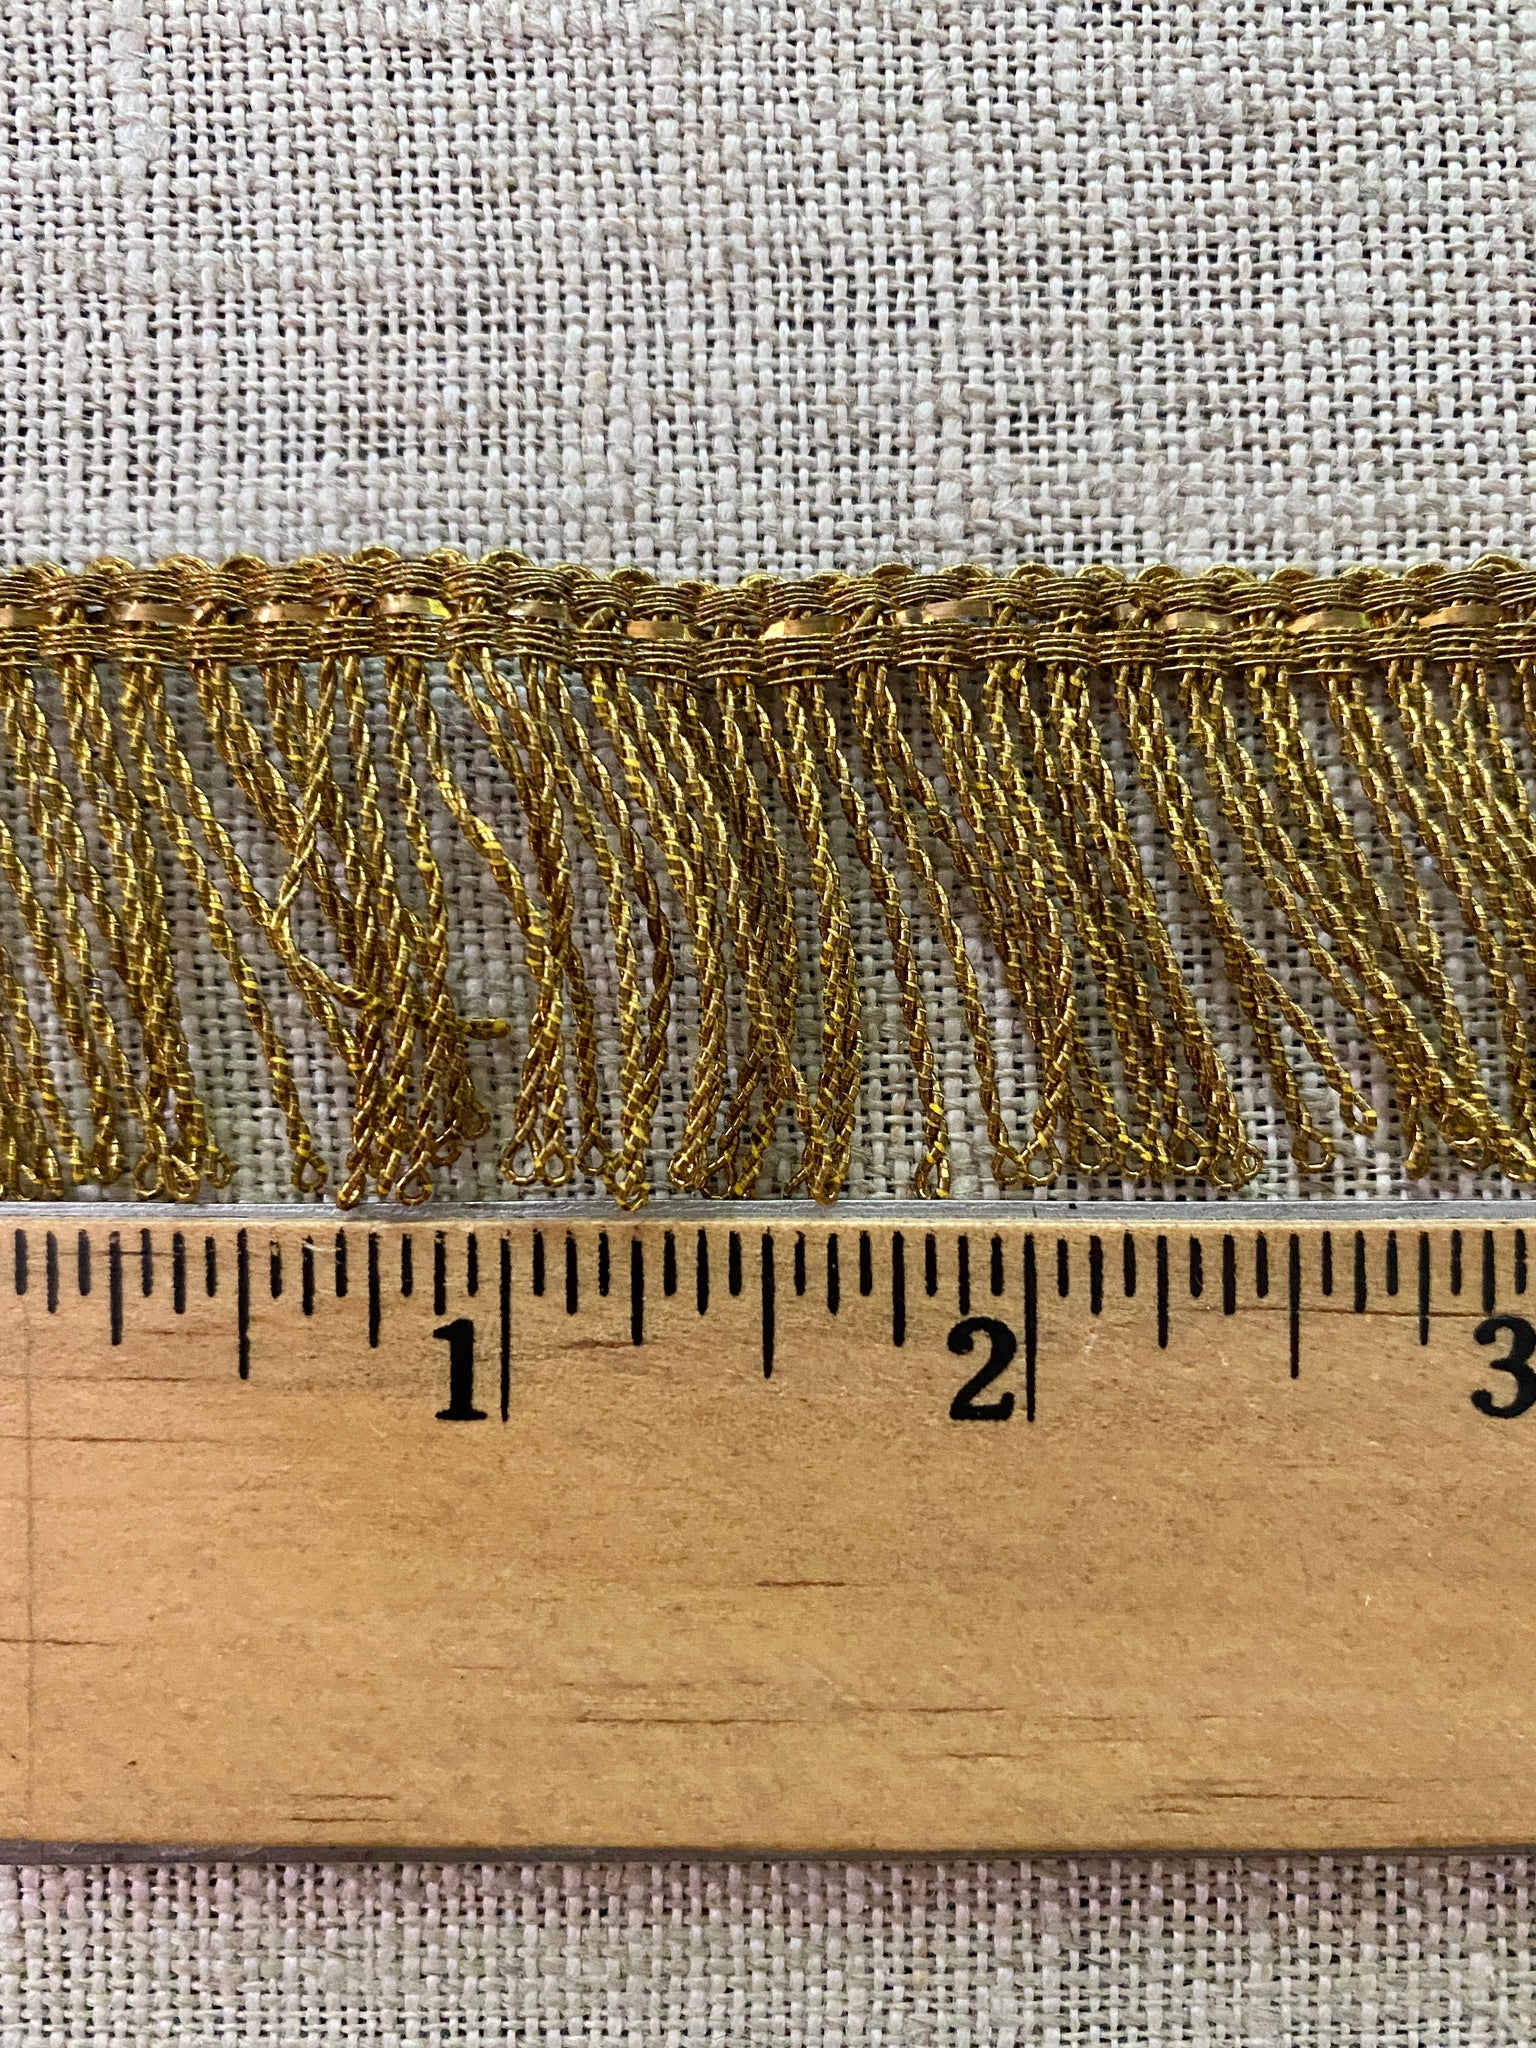 211.1 Metallic bullion fringe bright gold 1-1/2 (38mm)